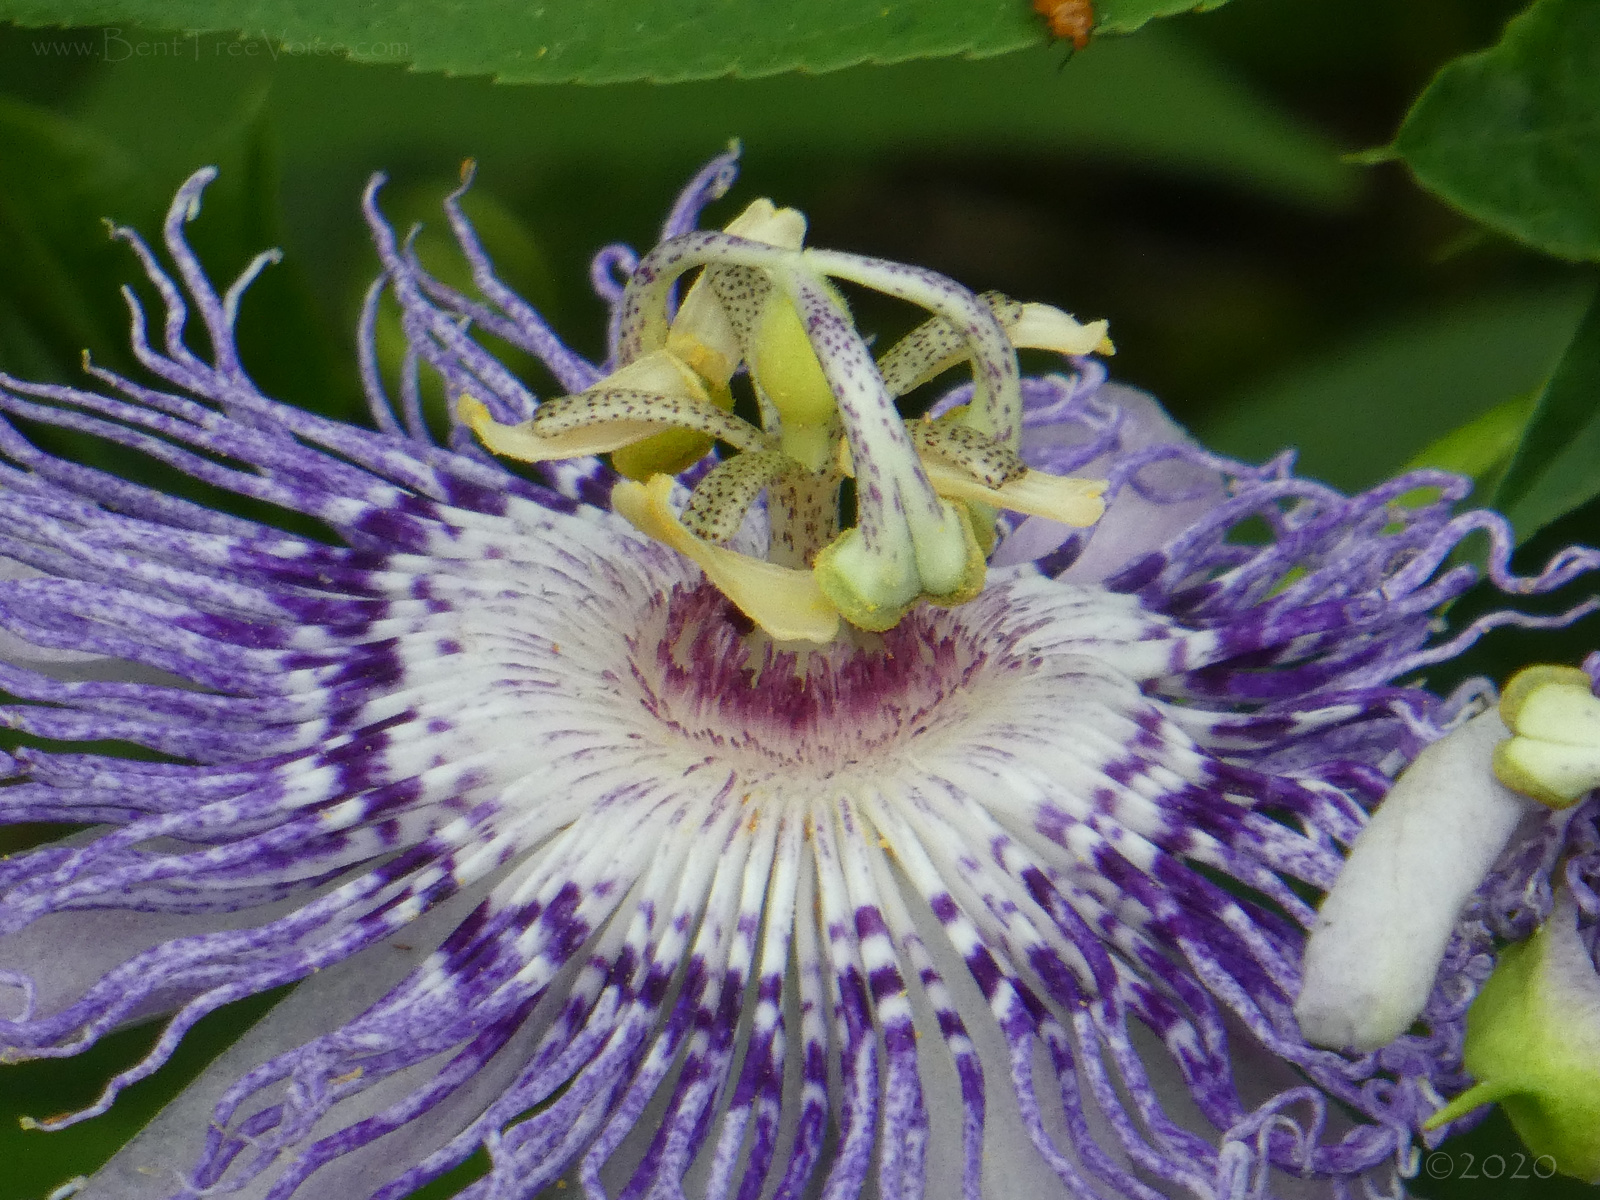 August 14, 2020 - Passionflower (aka Maypop) blooming in Bent Tree